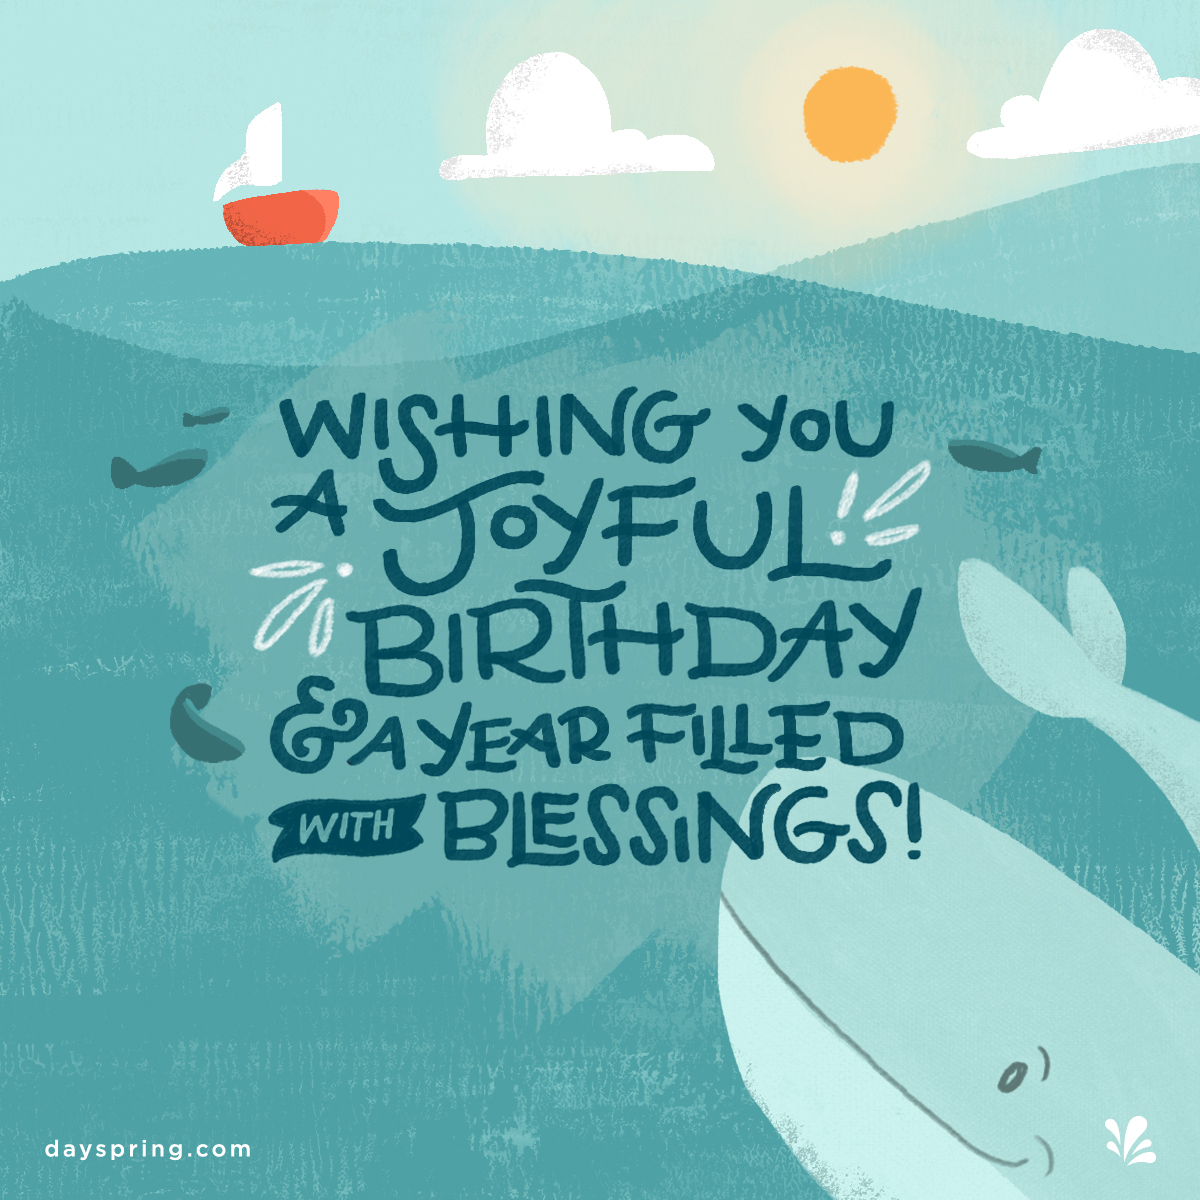 Birthday Ecards | Dayspring - Free Printable Christian Birthday Greeting Cards